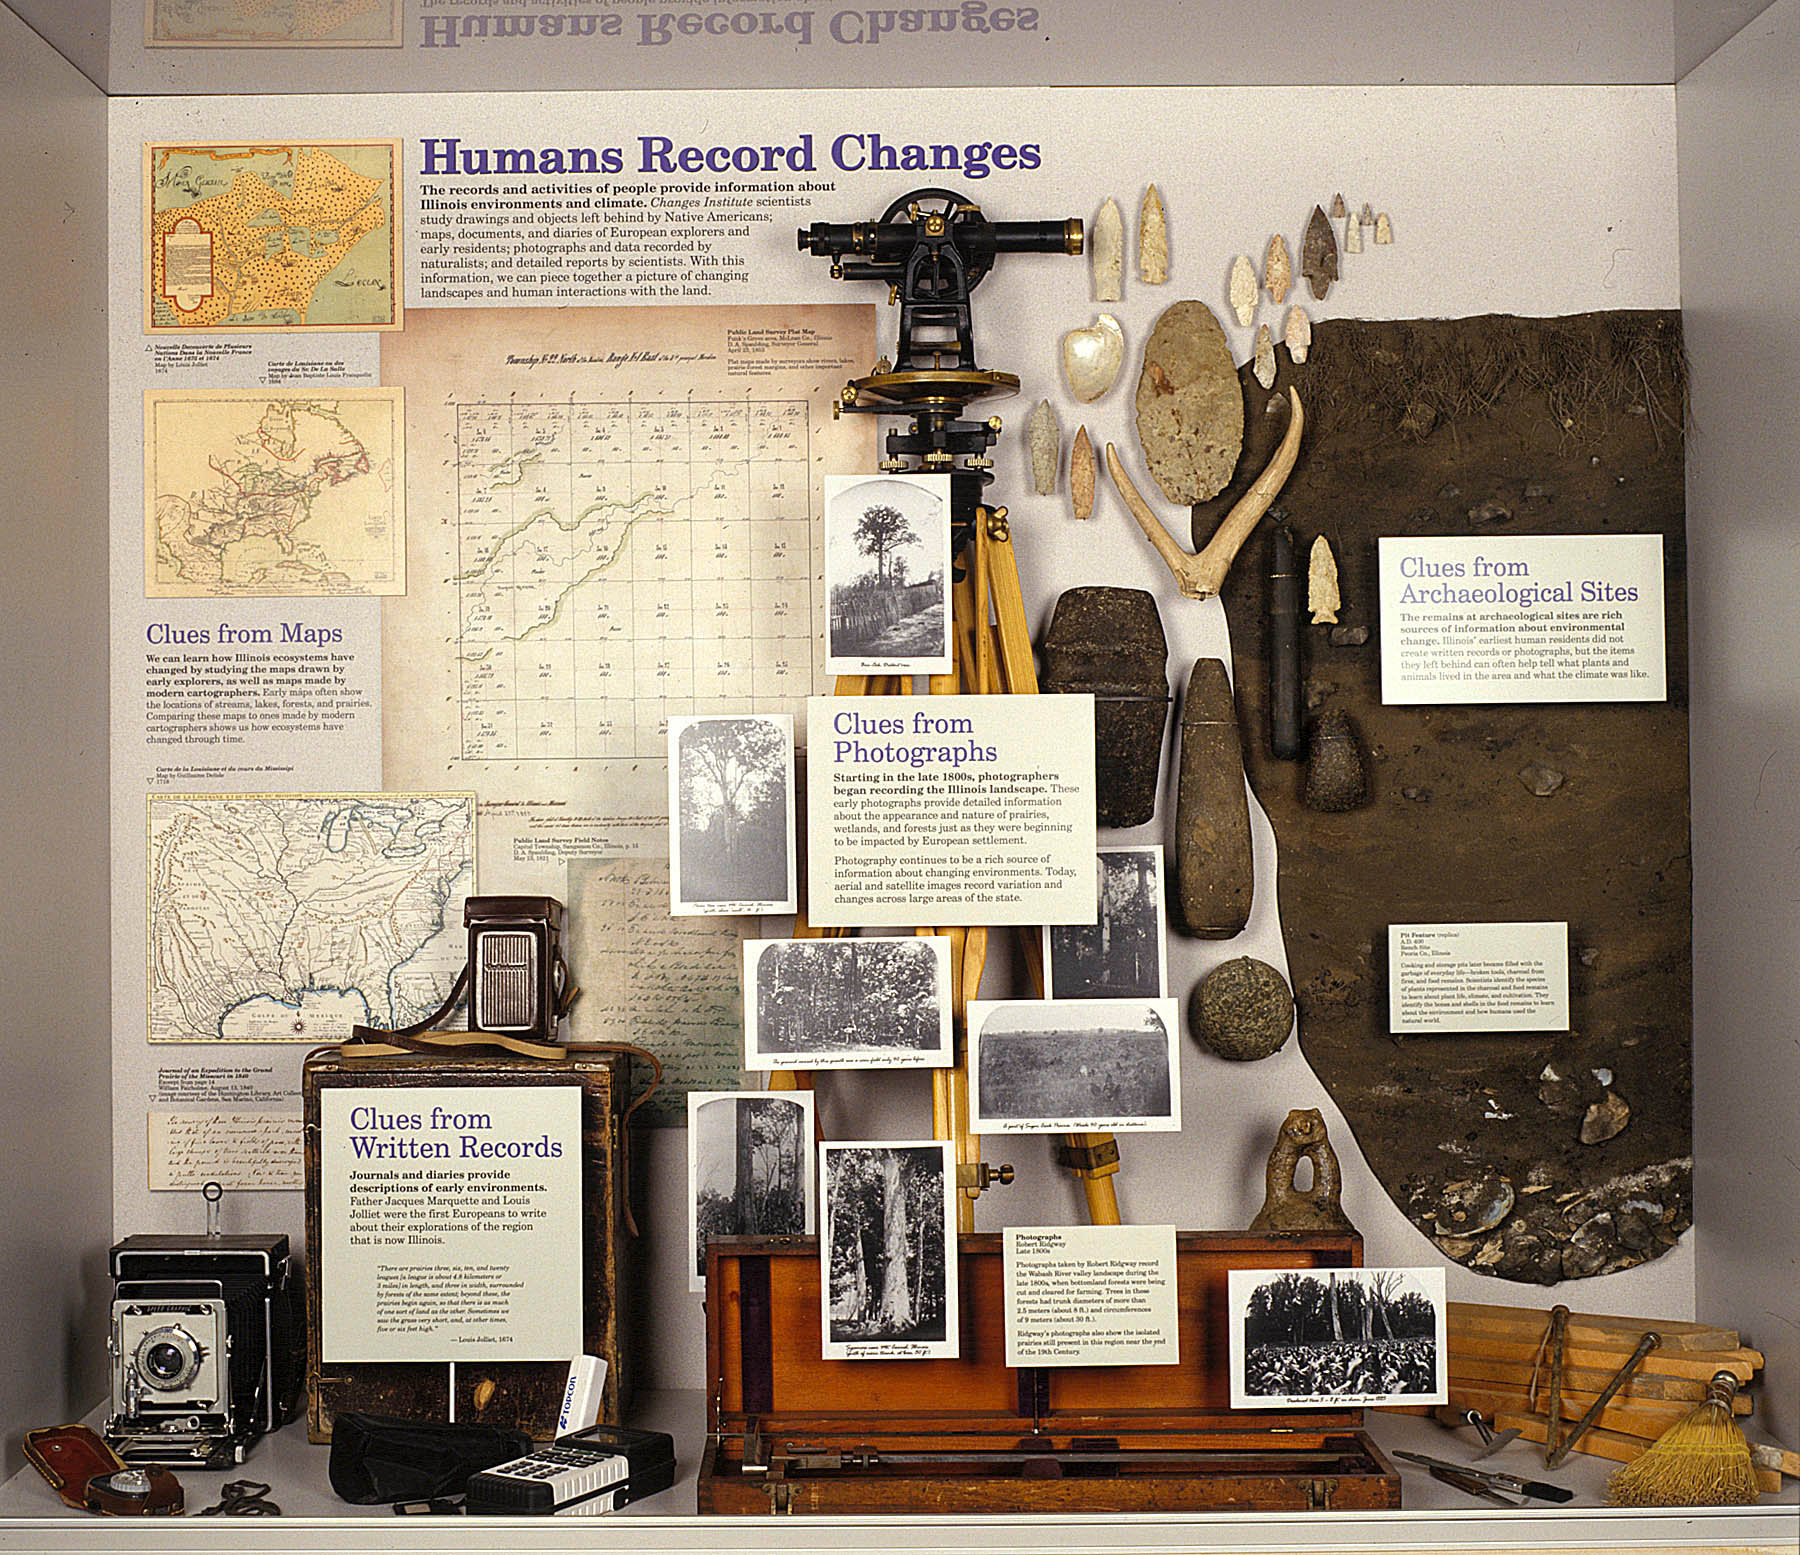 exhibit panel on the human record